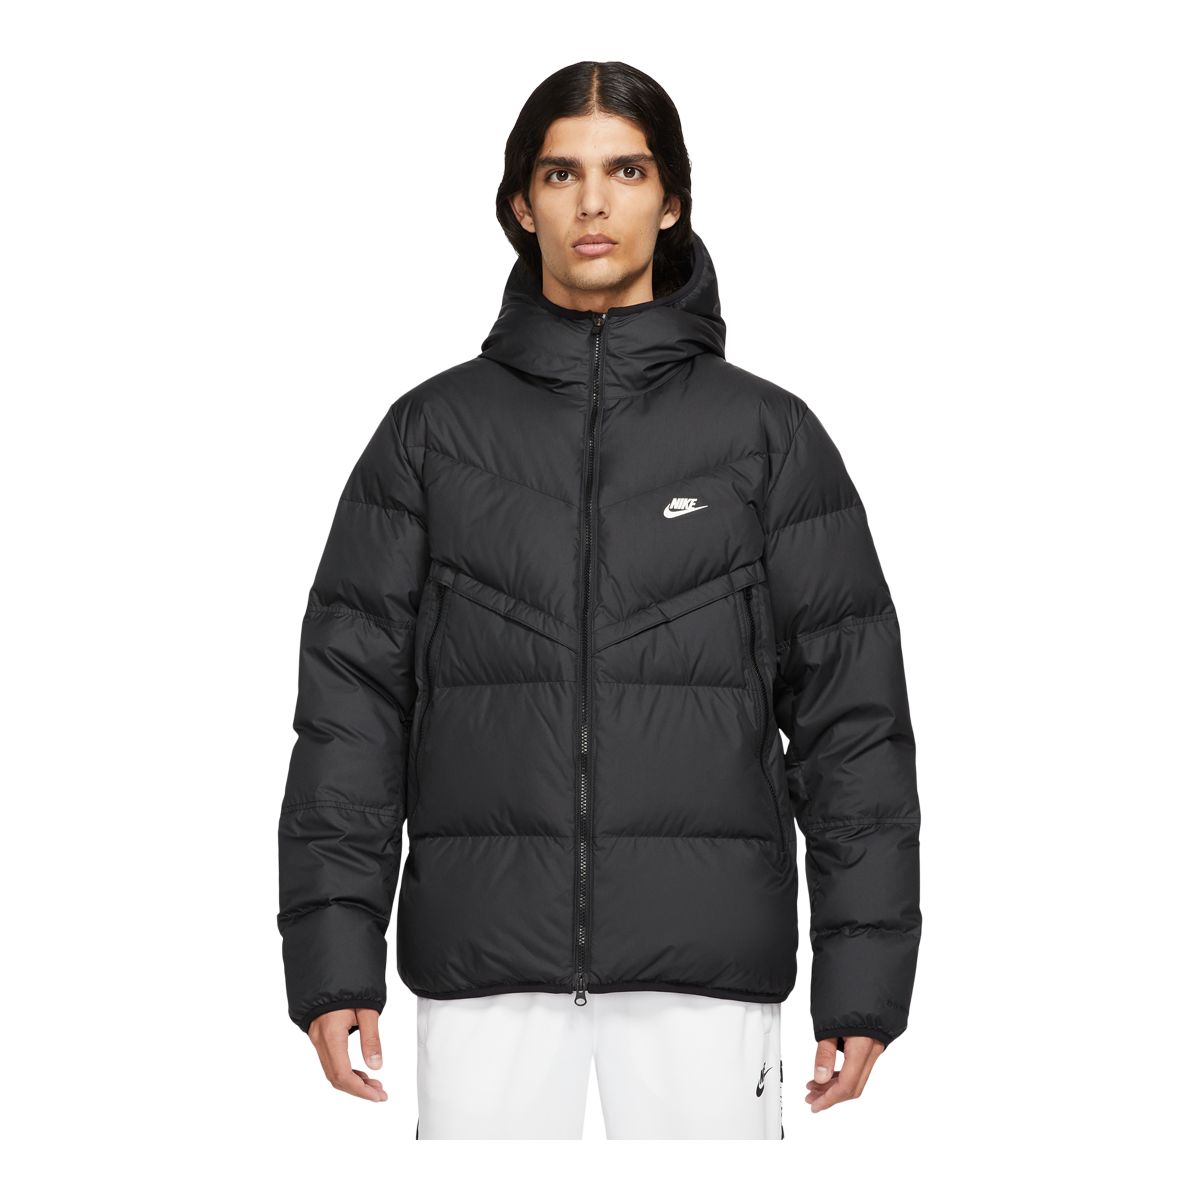 Nike Men's Storm-FIT Windrunner Winter Jacket  Short Insulated Down Hooded Lightweight